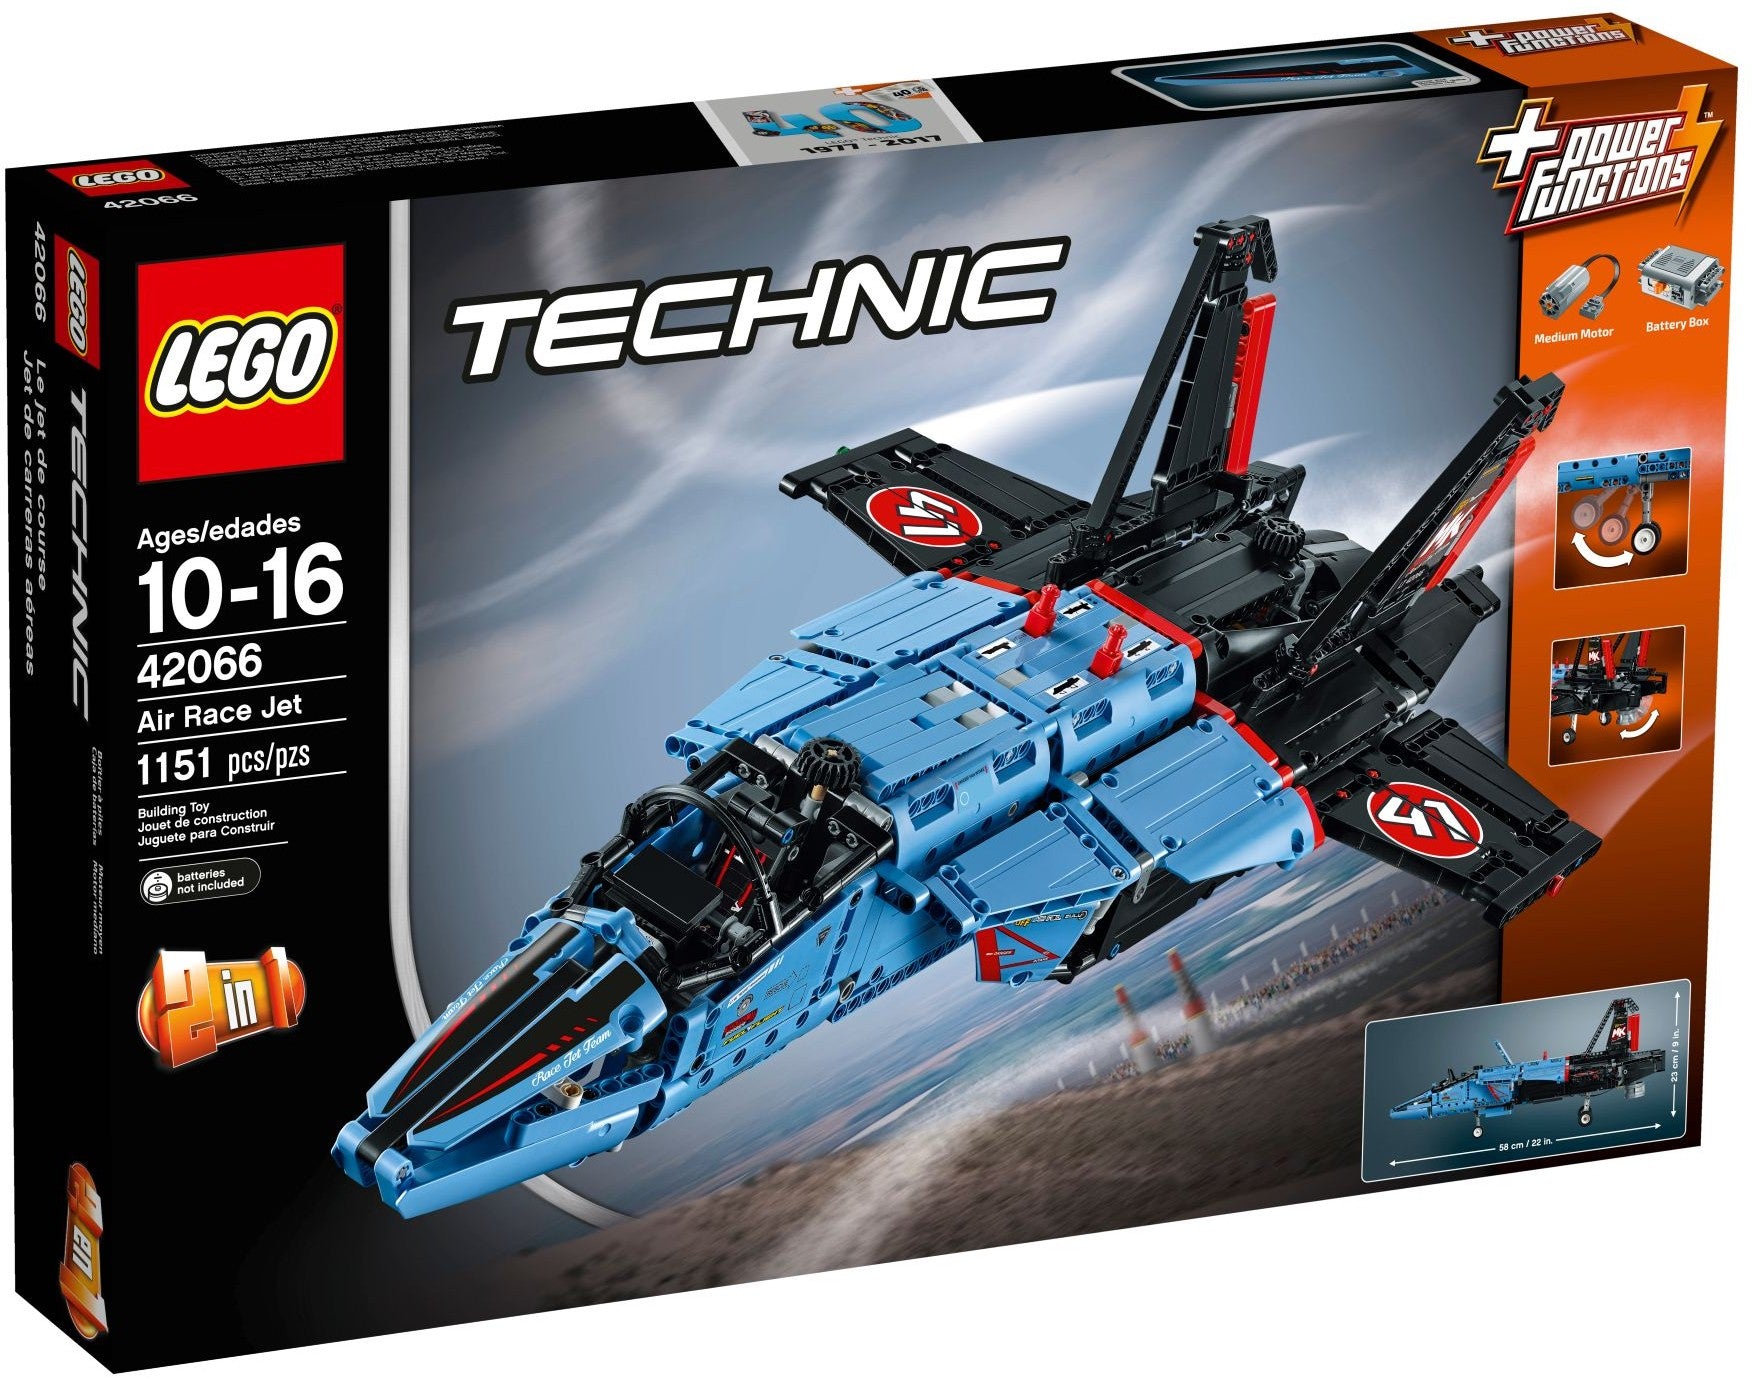 Lego Technic 42066 - Air Race Jet